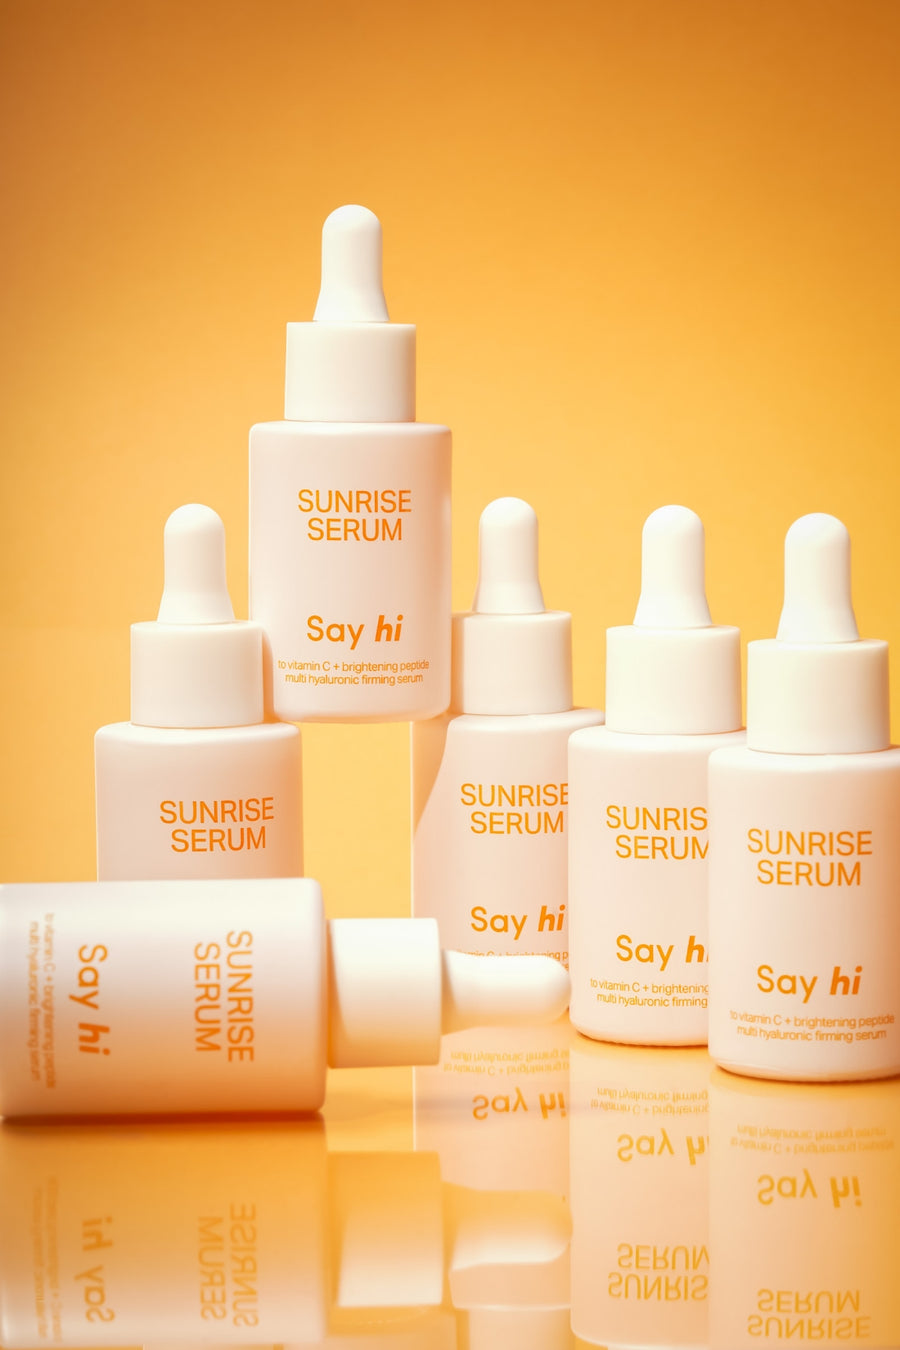 SUNRISE SERUM vitamin C + brightening peptide multi hyaluronic firming serum